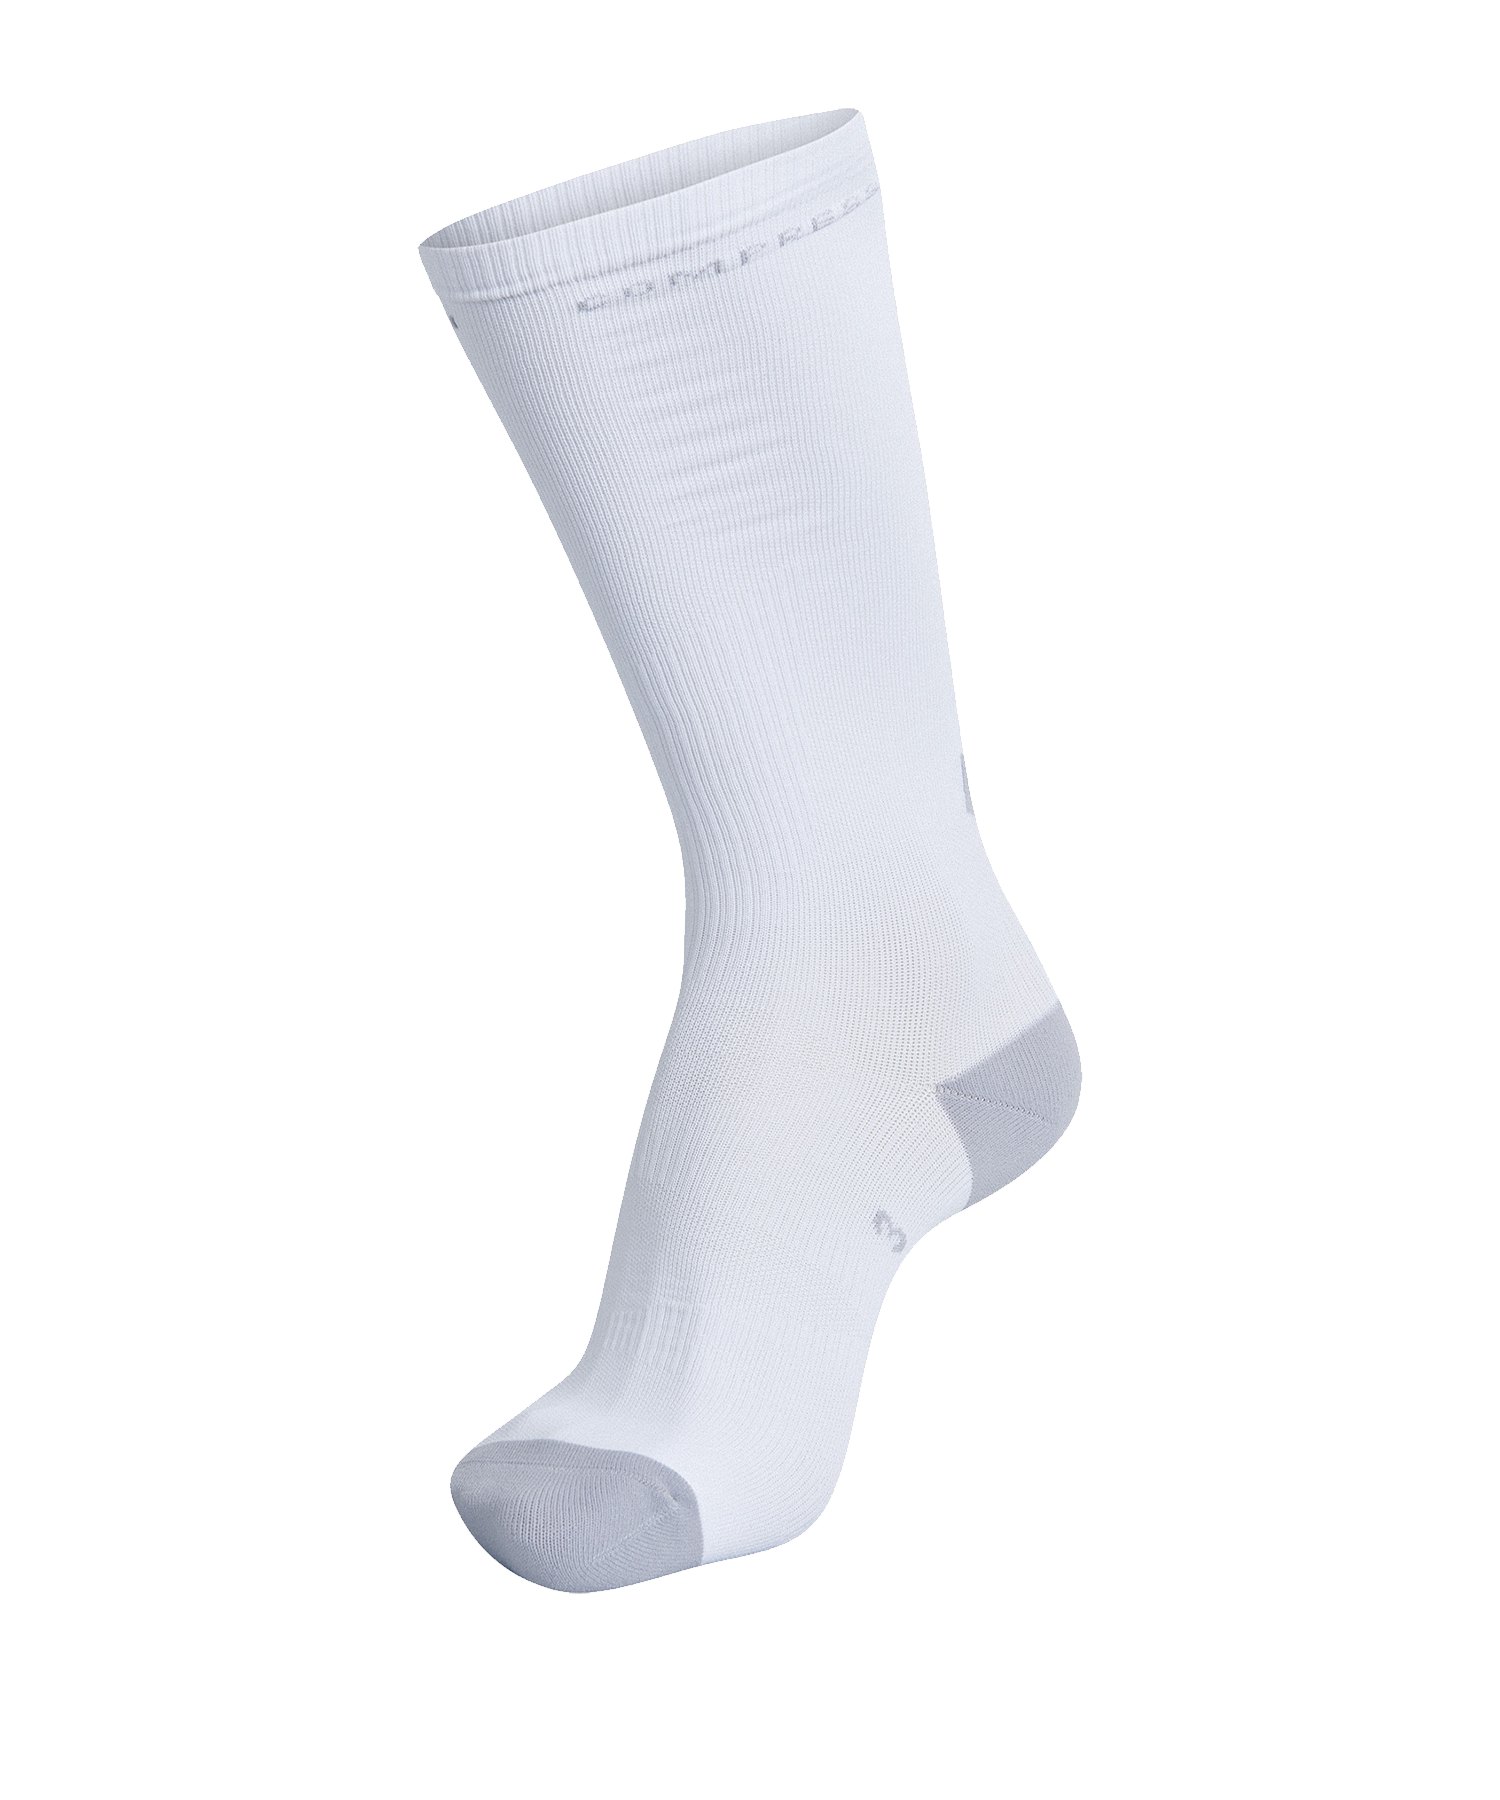 Hummel Elite Compression Sock Socken Weiss F9077 - Weiss